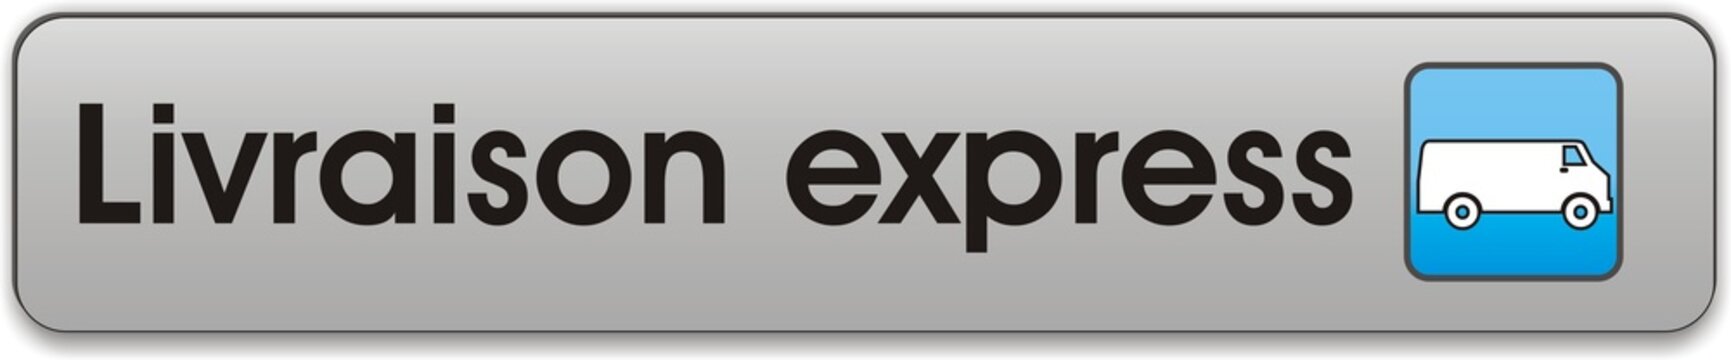 bouton livraison express